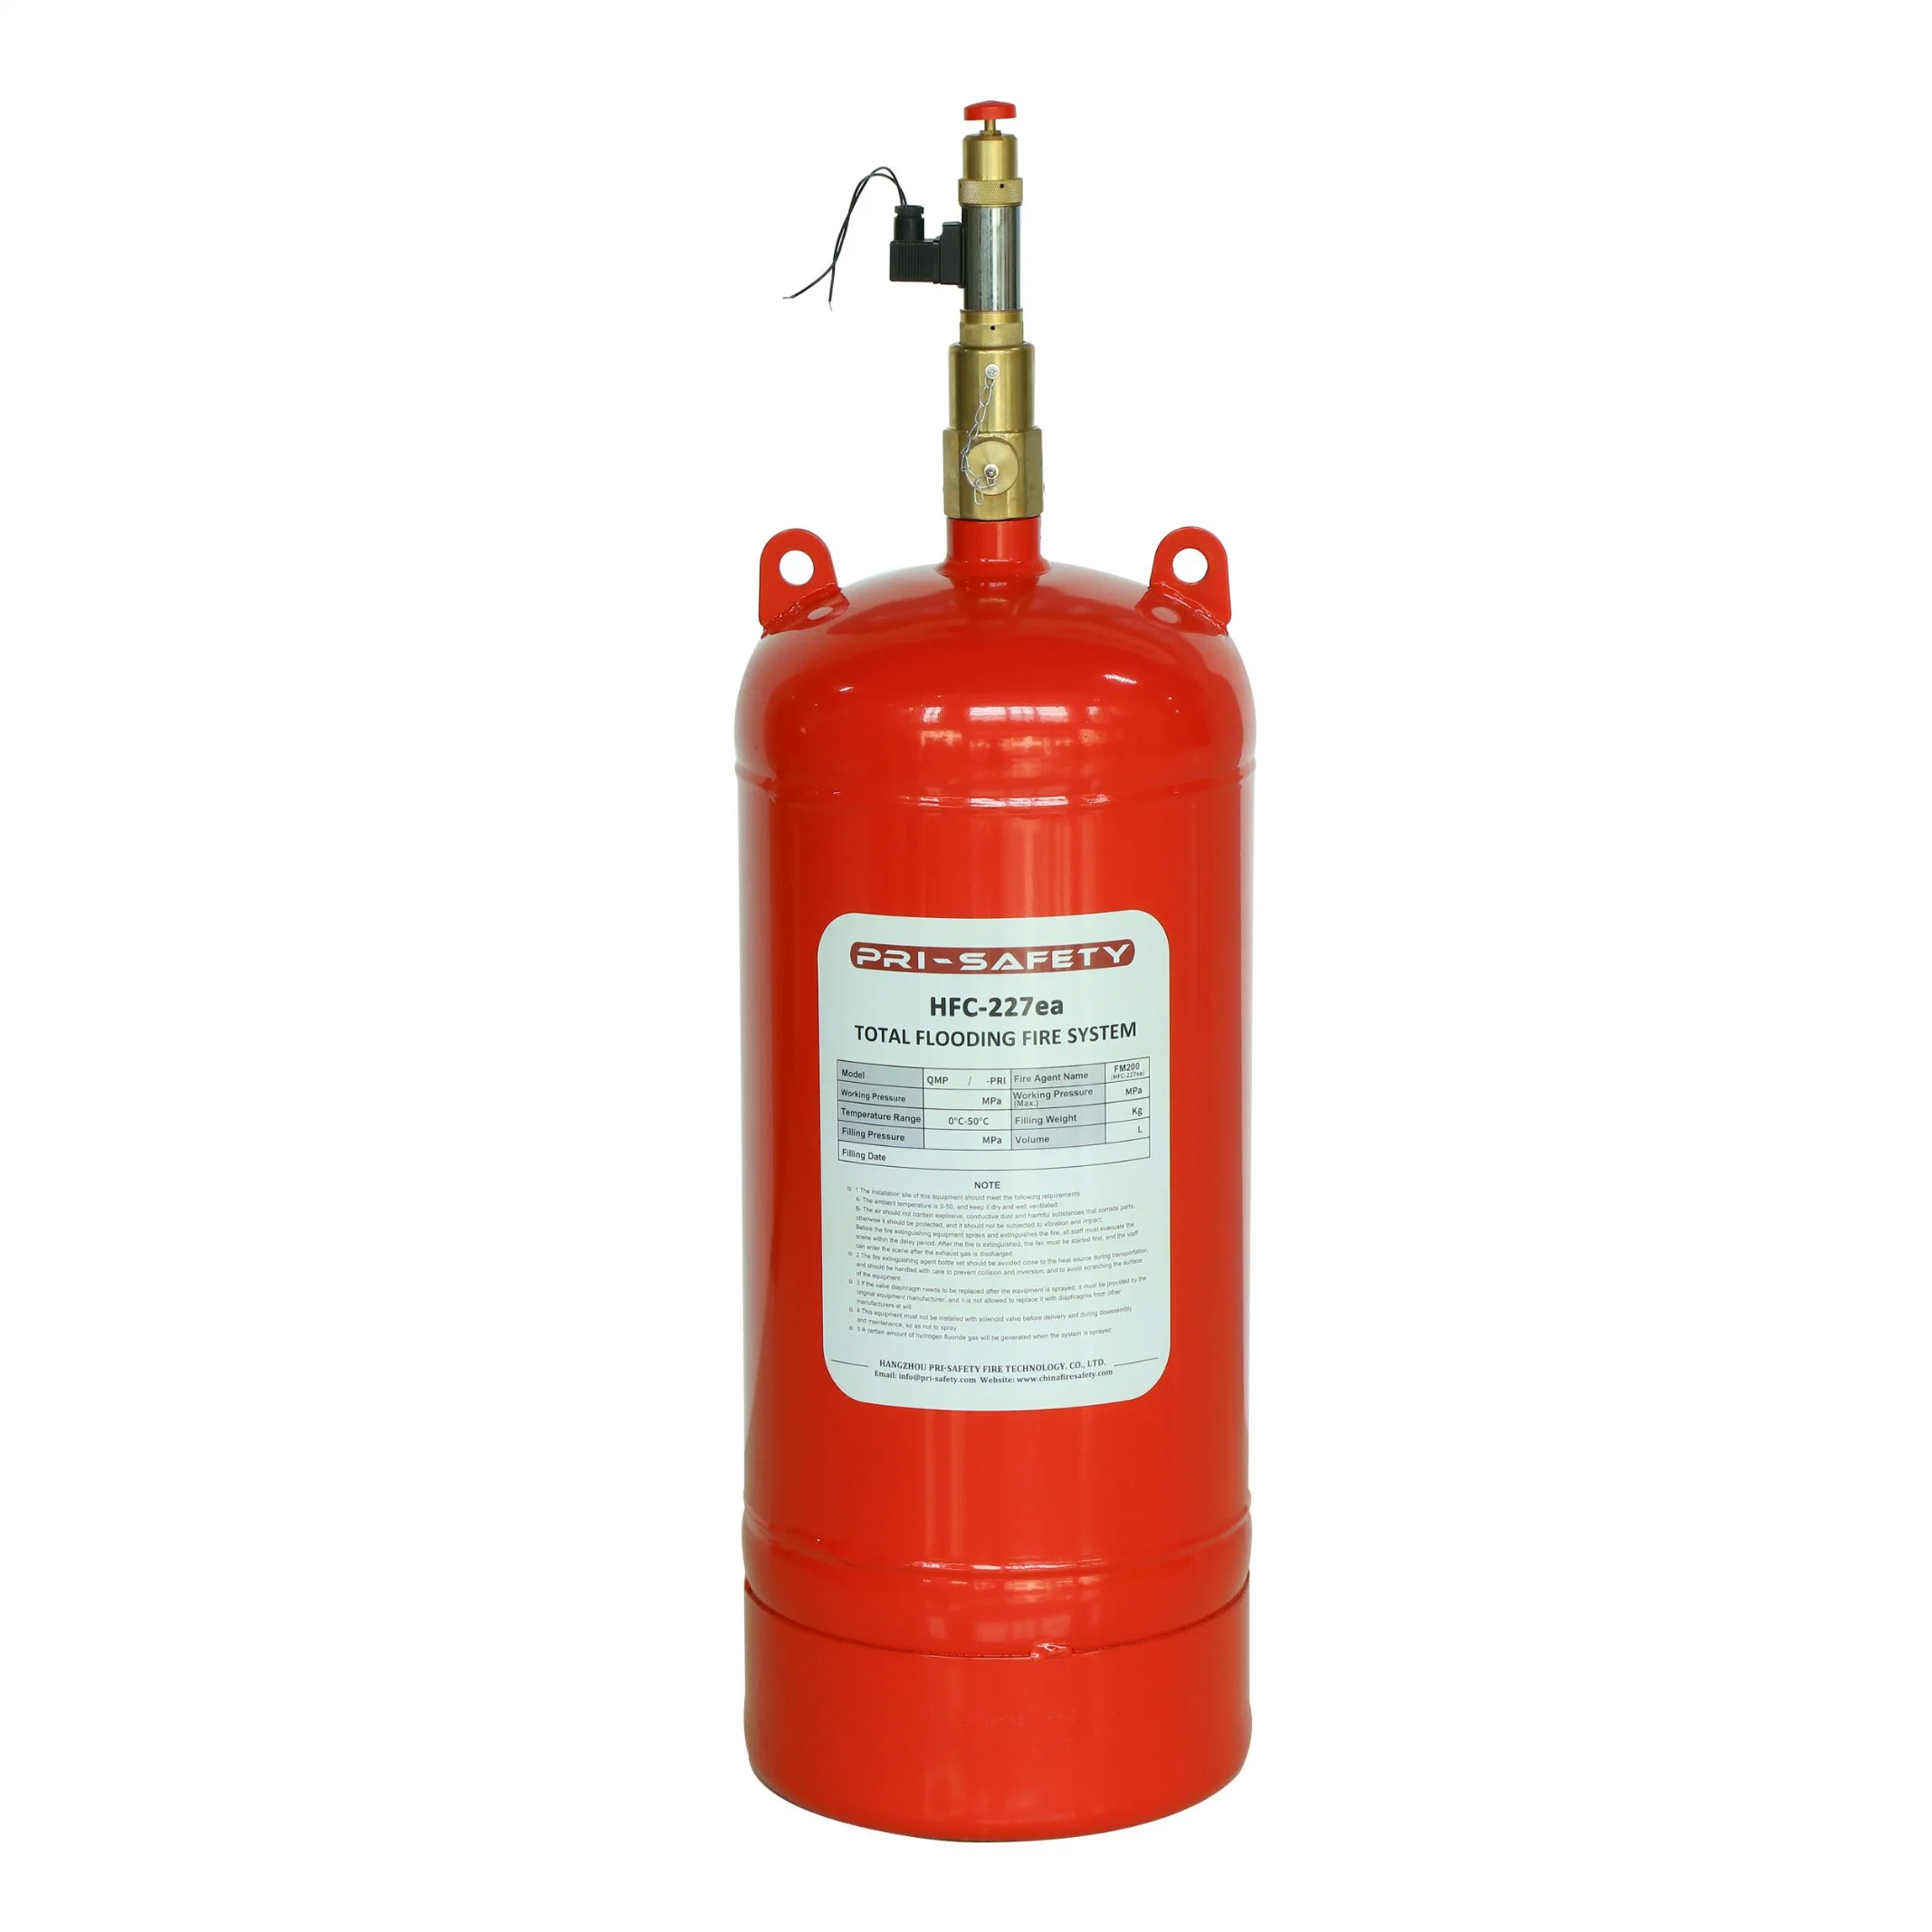 FM200 Empty Cylinder FM200 Fire Suppression System for Extinguishing Fires